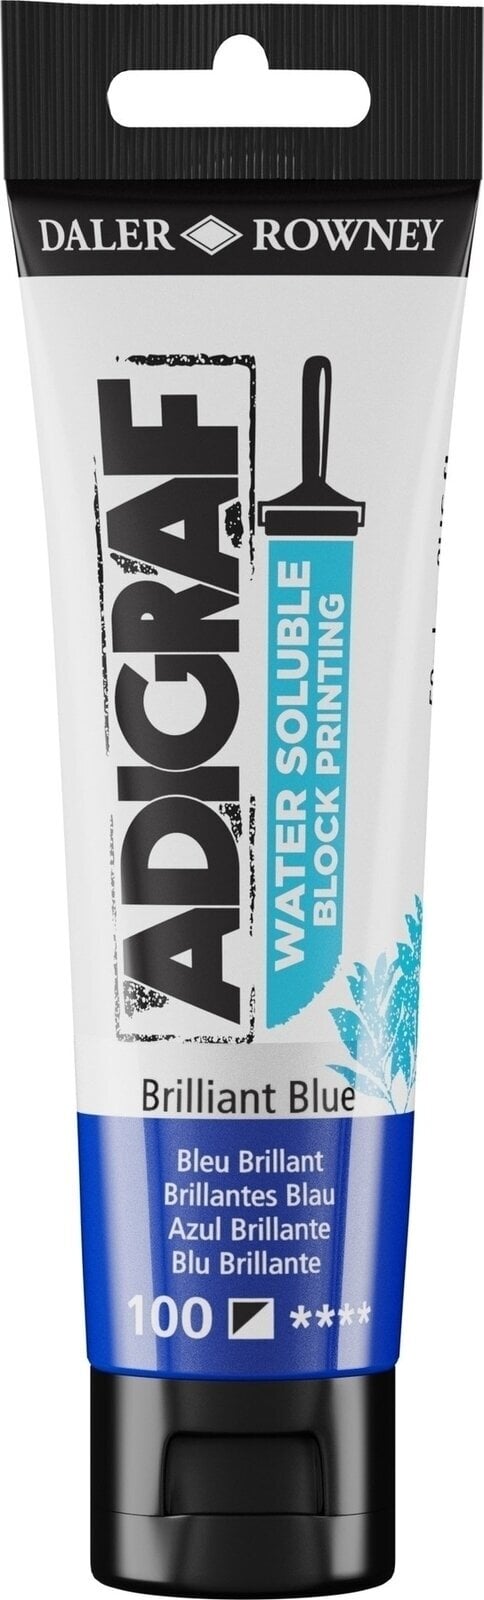 Vernice per linoleografia Daler Rowney Adigraf Block Printing Water Soluble Colour Vernice per linoleografia Brilliant Blue 59 ml